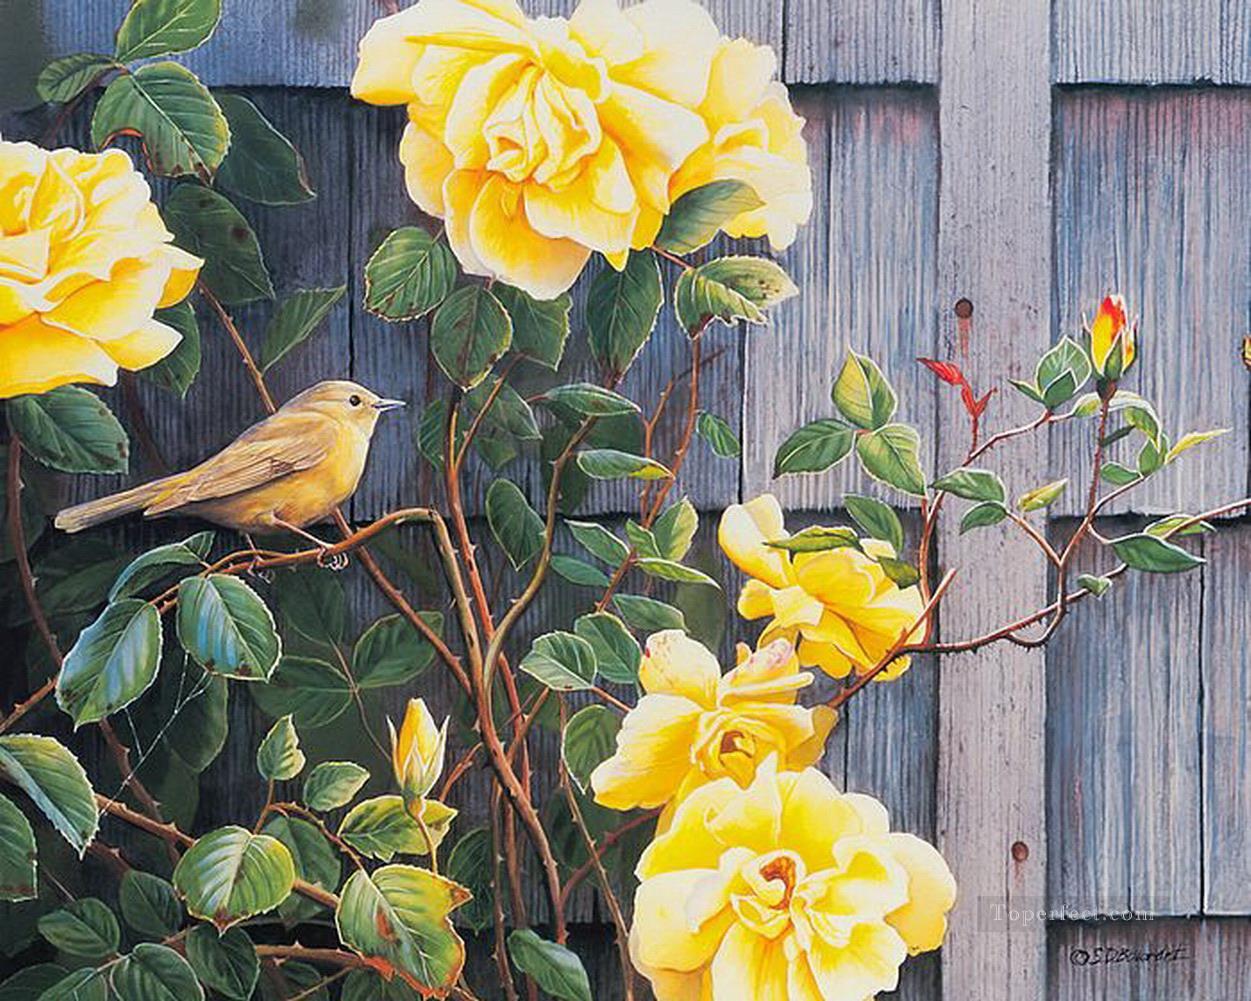 Vögel und gelbe Rose Ölgemälde